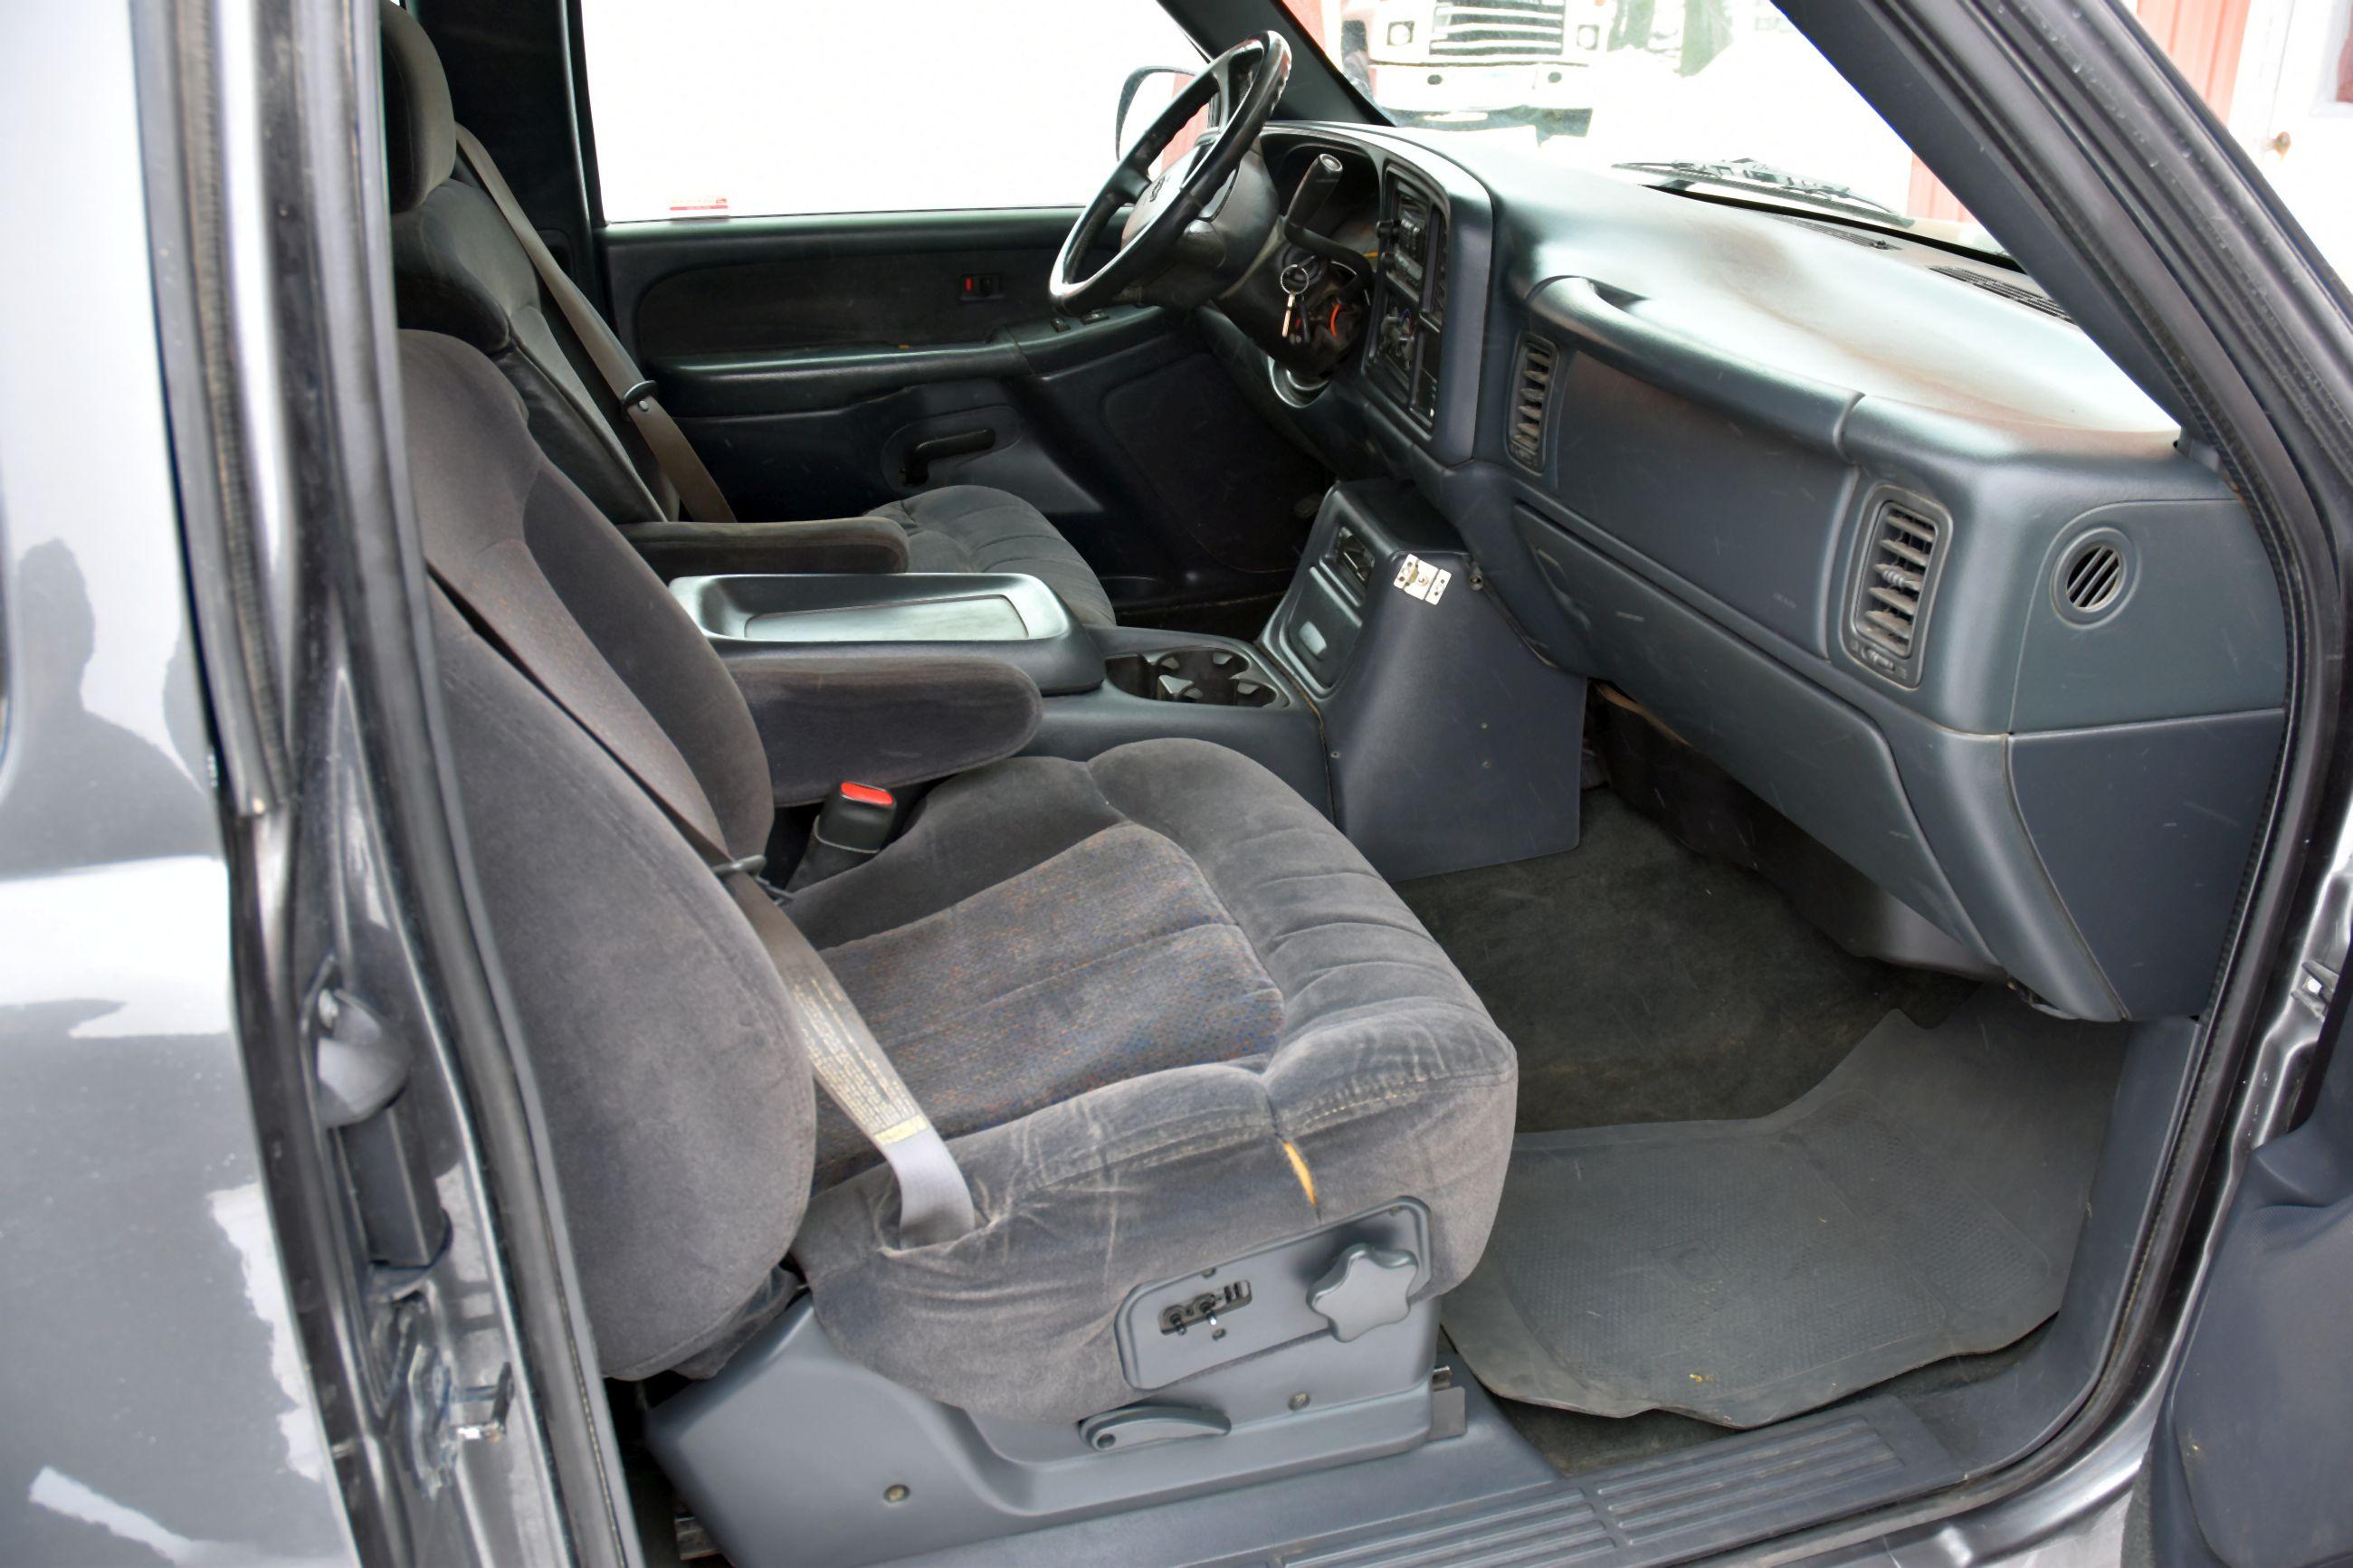 2001 Chevy 2500, 4x4 Ext Cab Pick-Up, 6.0 V8, Short Box, 199,882 Miles, Power Windows, Power Locks,